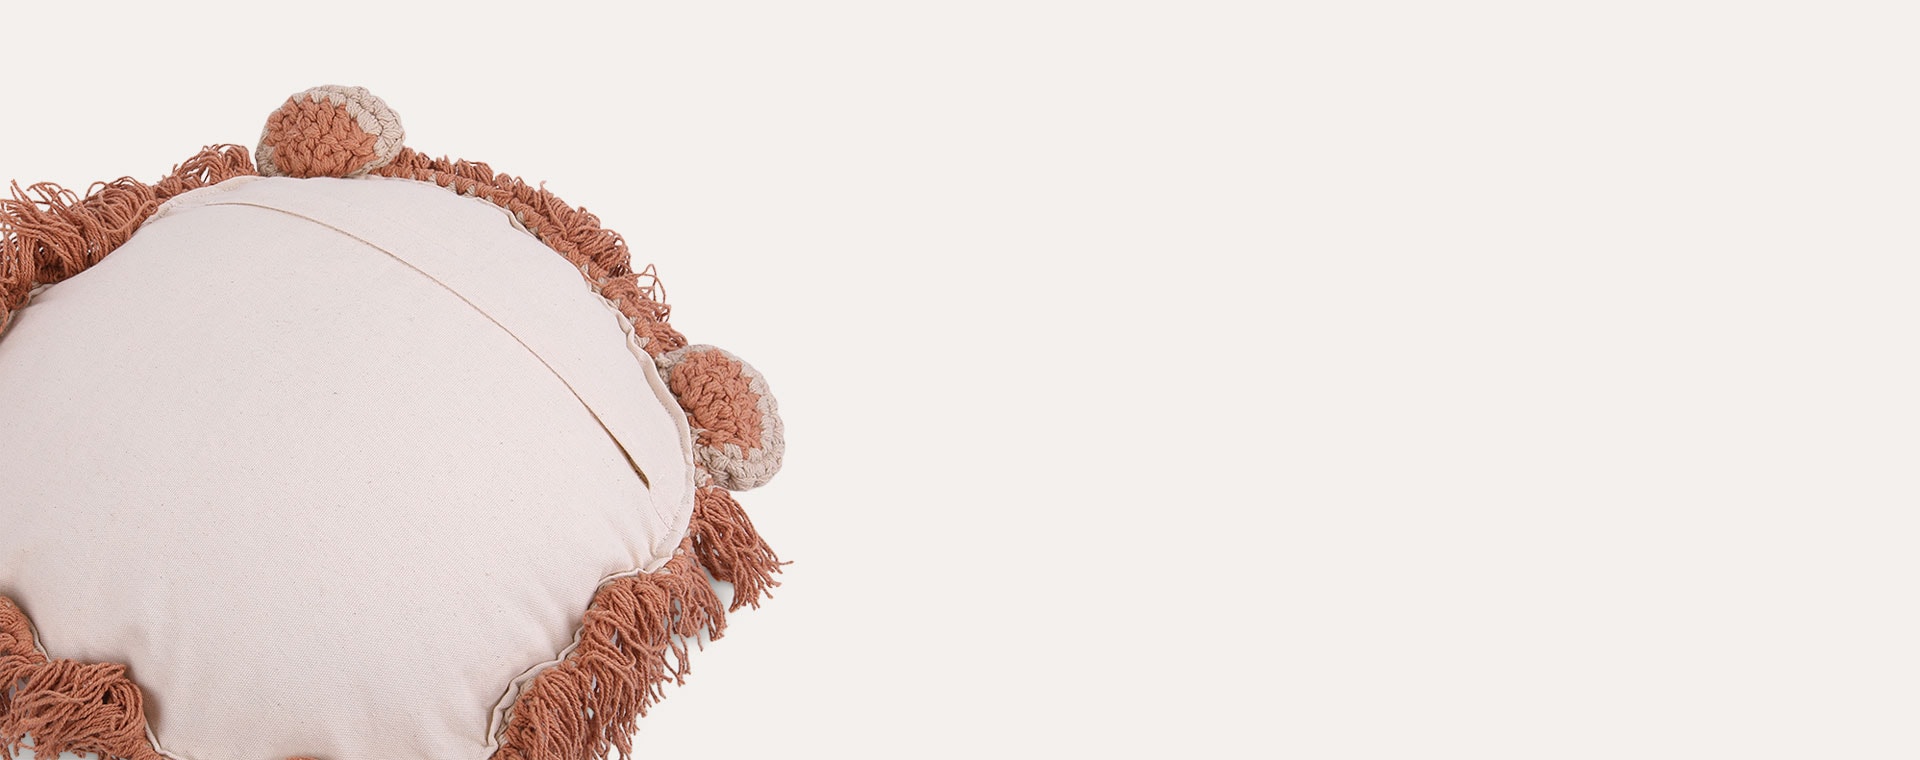 Neutral Kids Depot Lion Crochet Cushion 40 cm